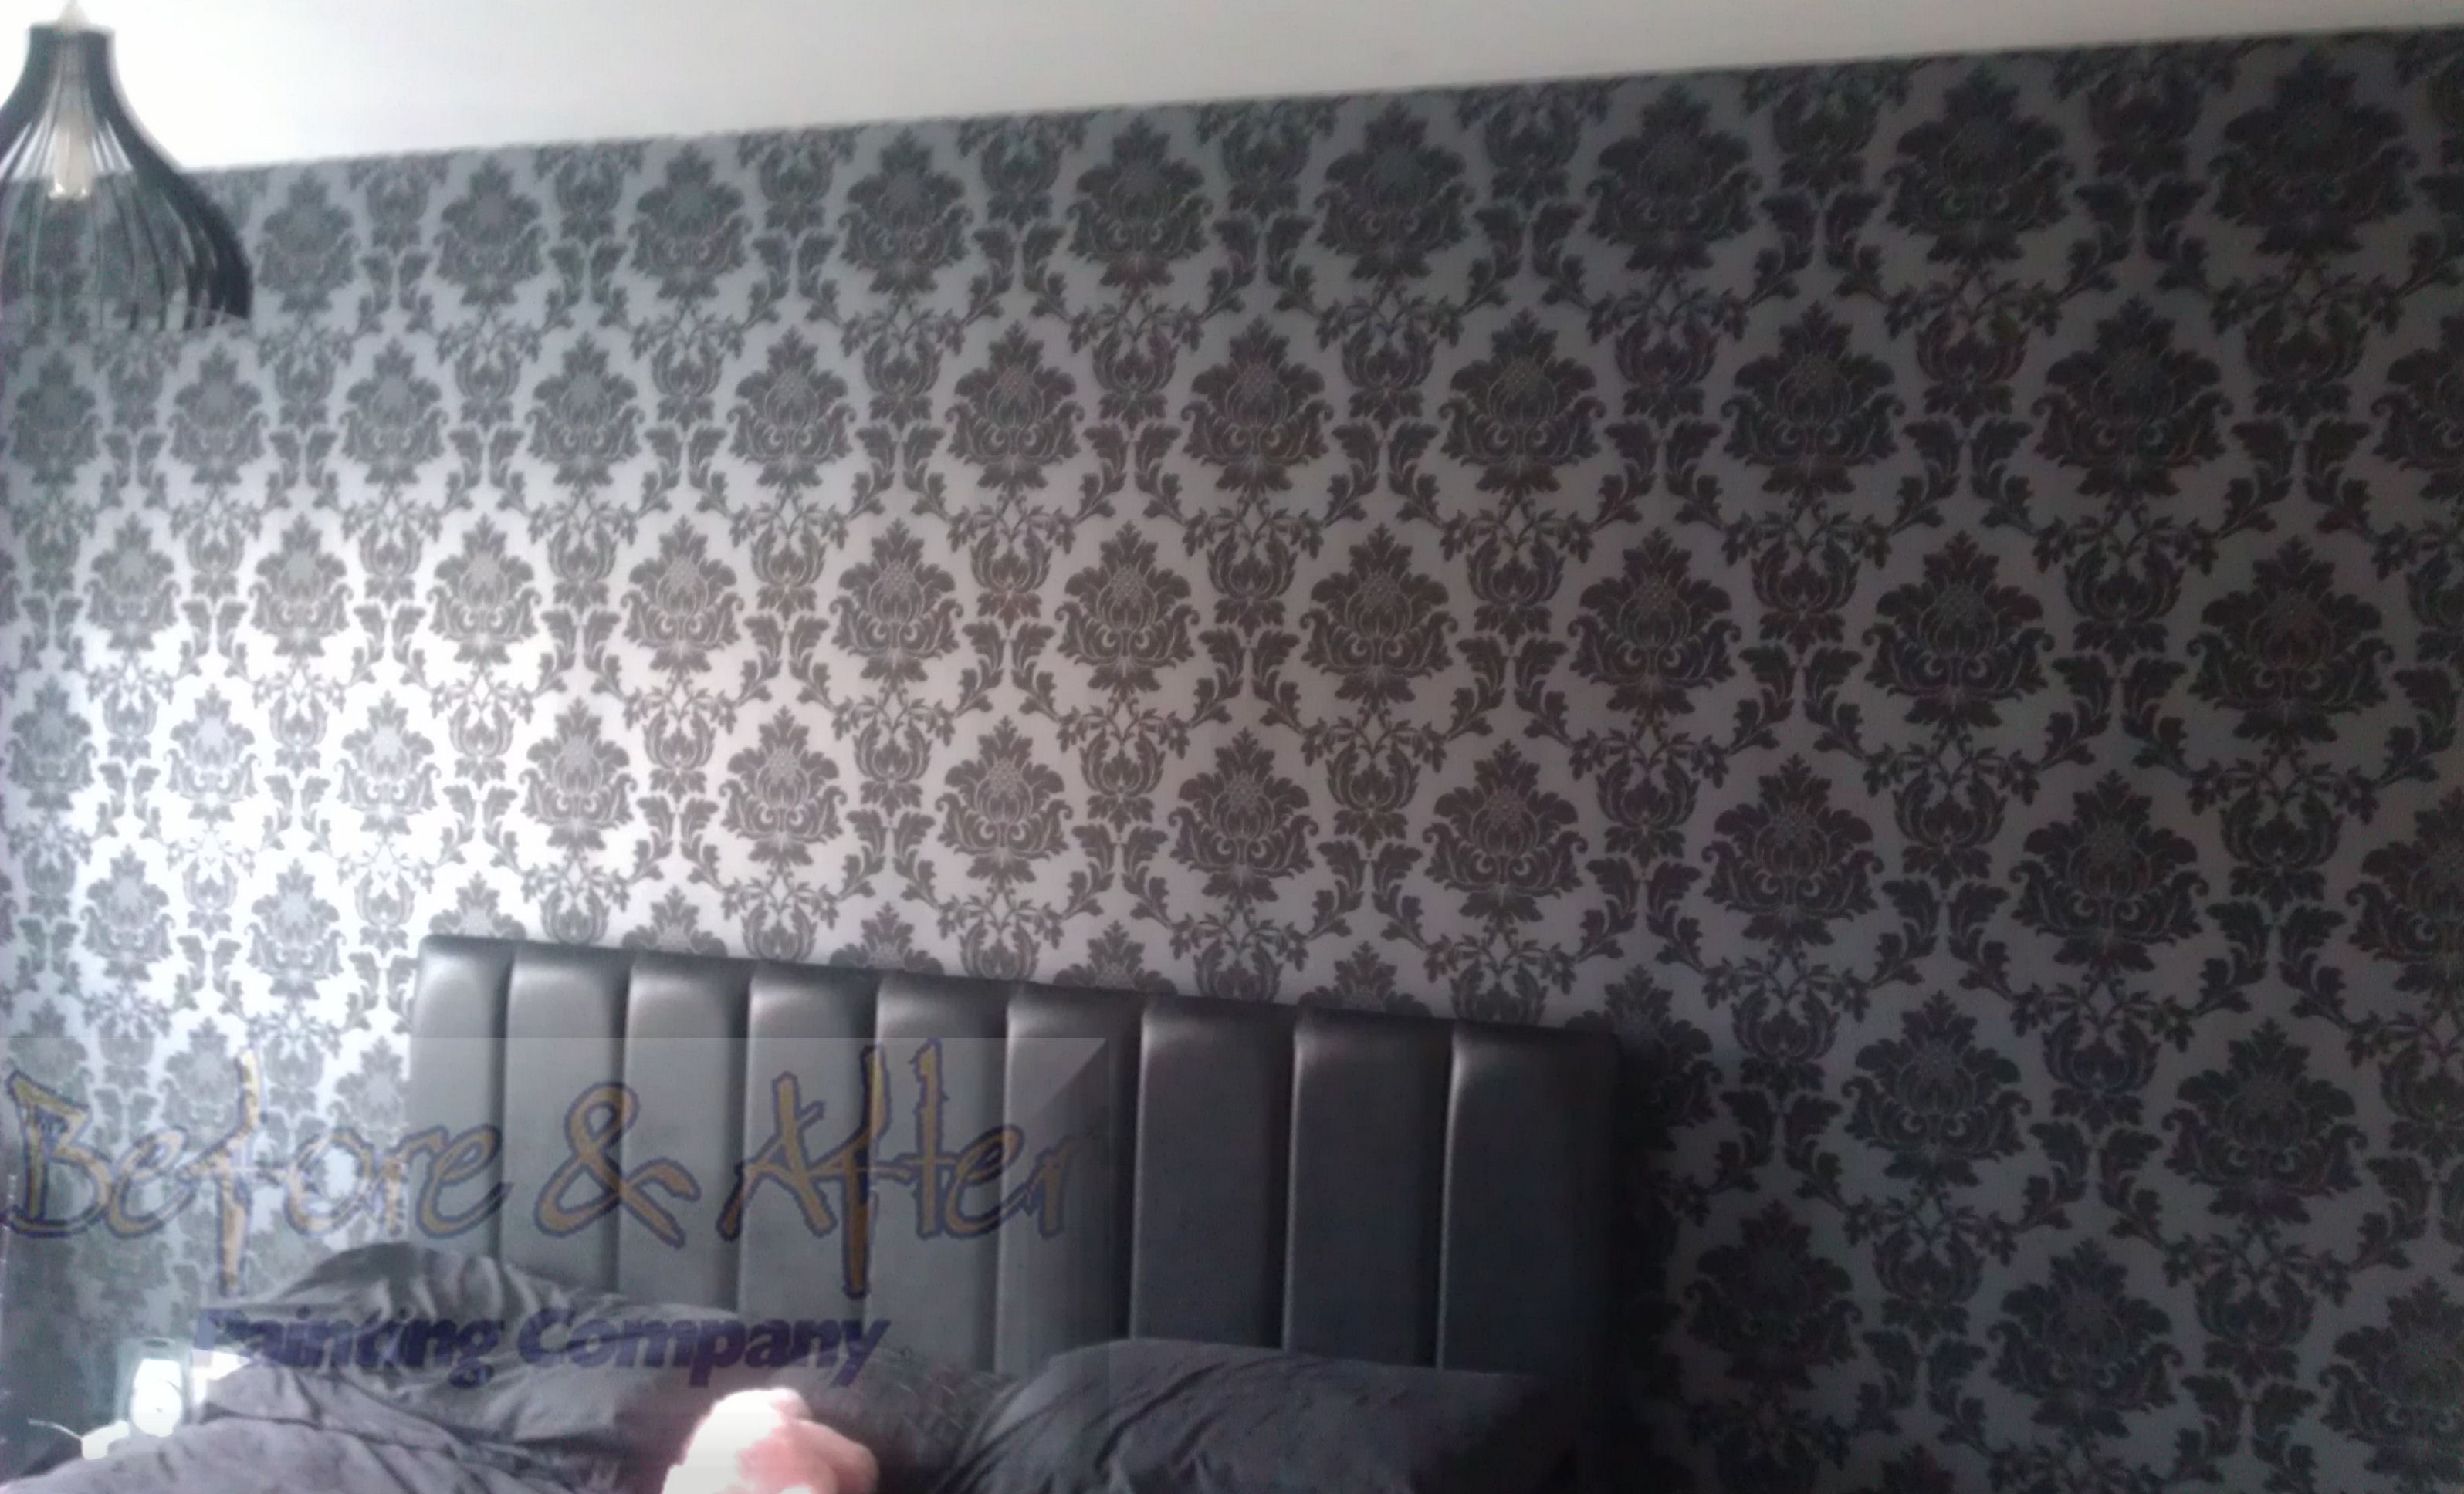 Homebase Feature Wallpaper In Bedroom Sittingbourne Property Kent